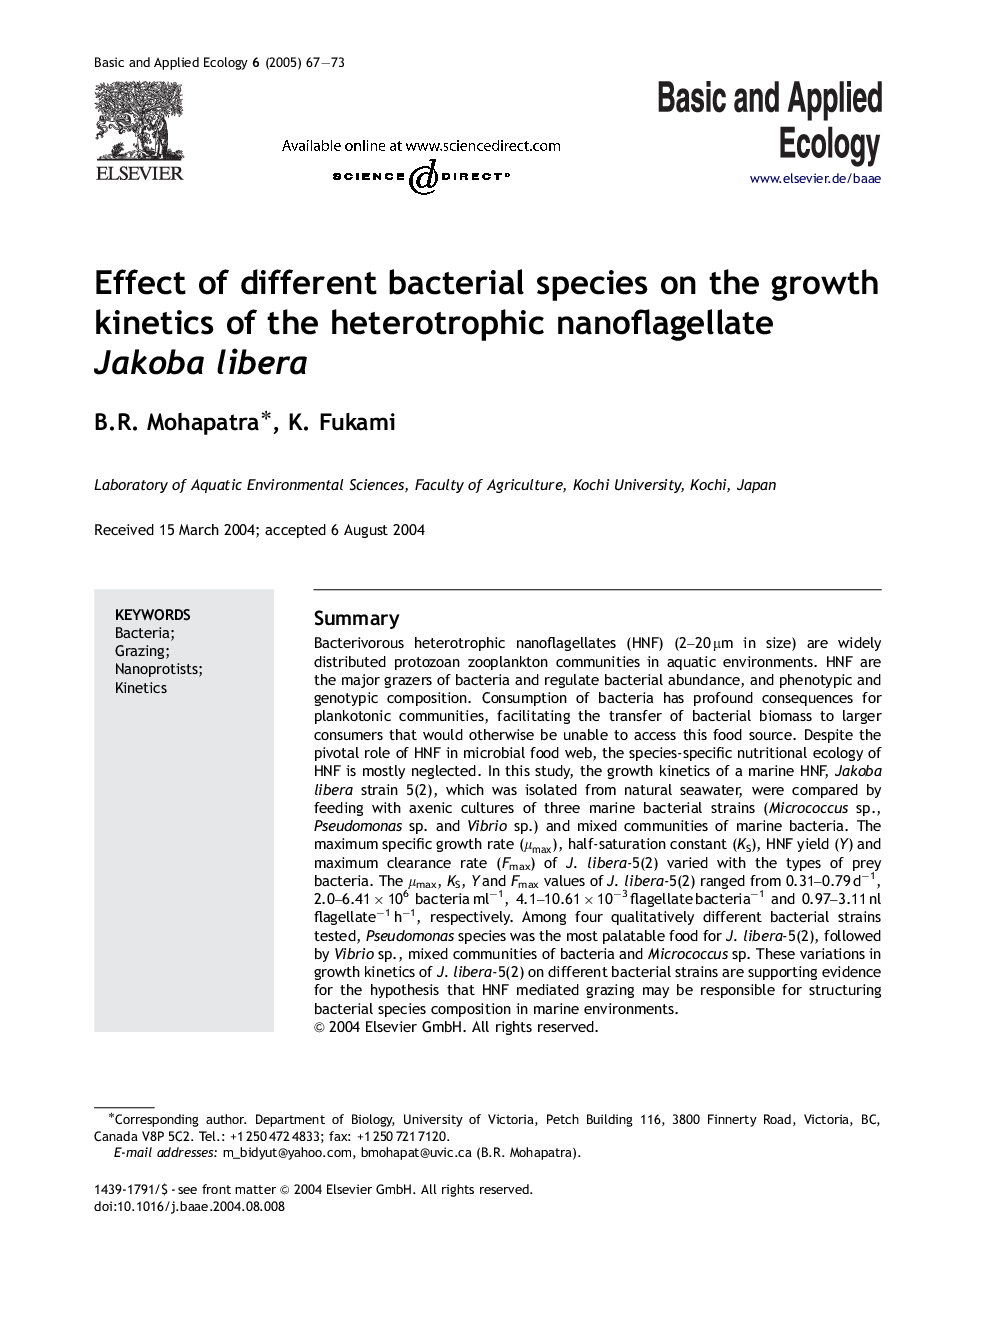 Effect of different bacterial species on the growth kinetics of the heterotrophic nanoflagellate Jakoba libera